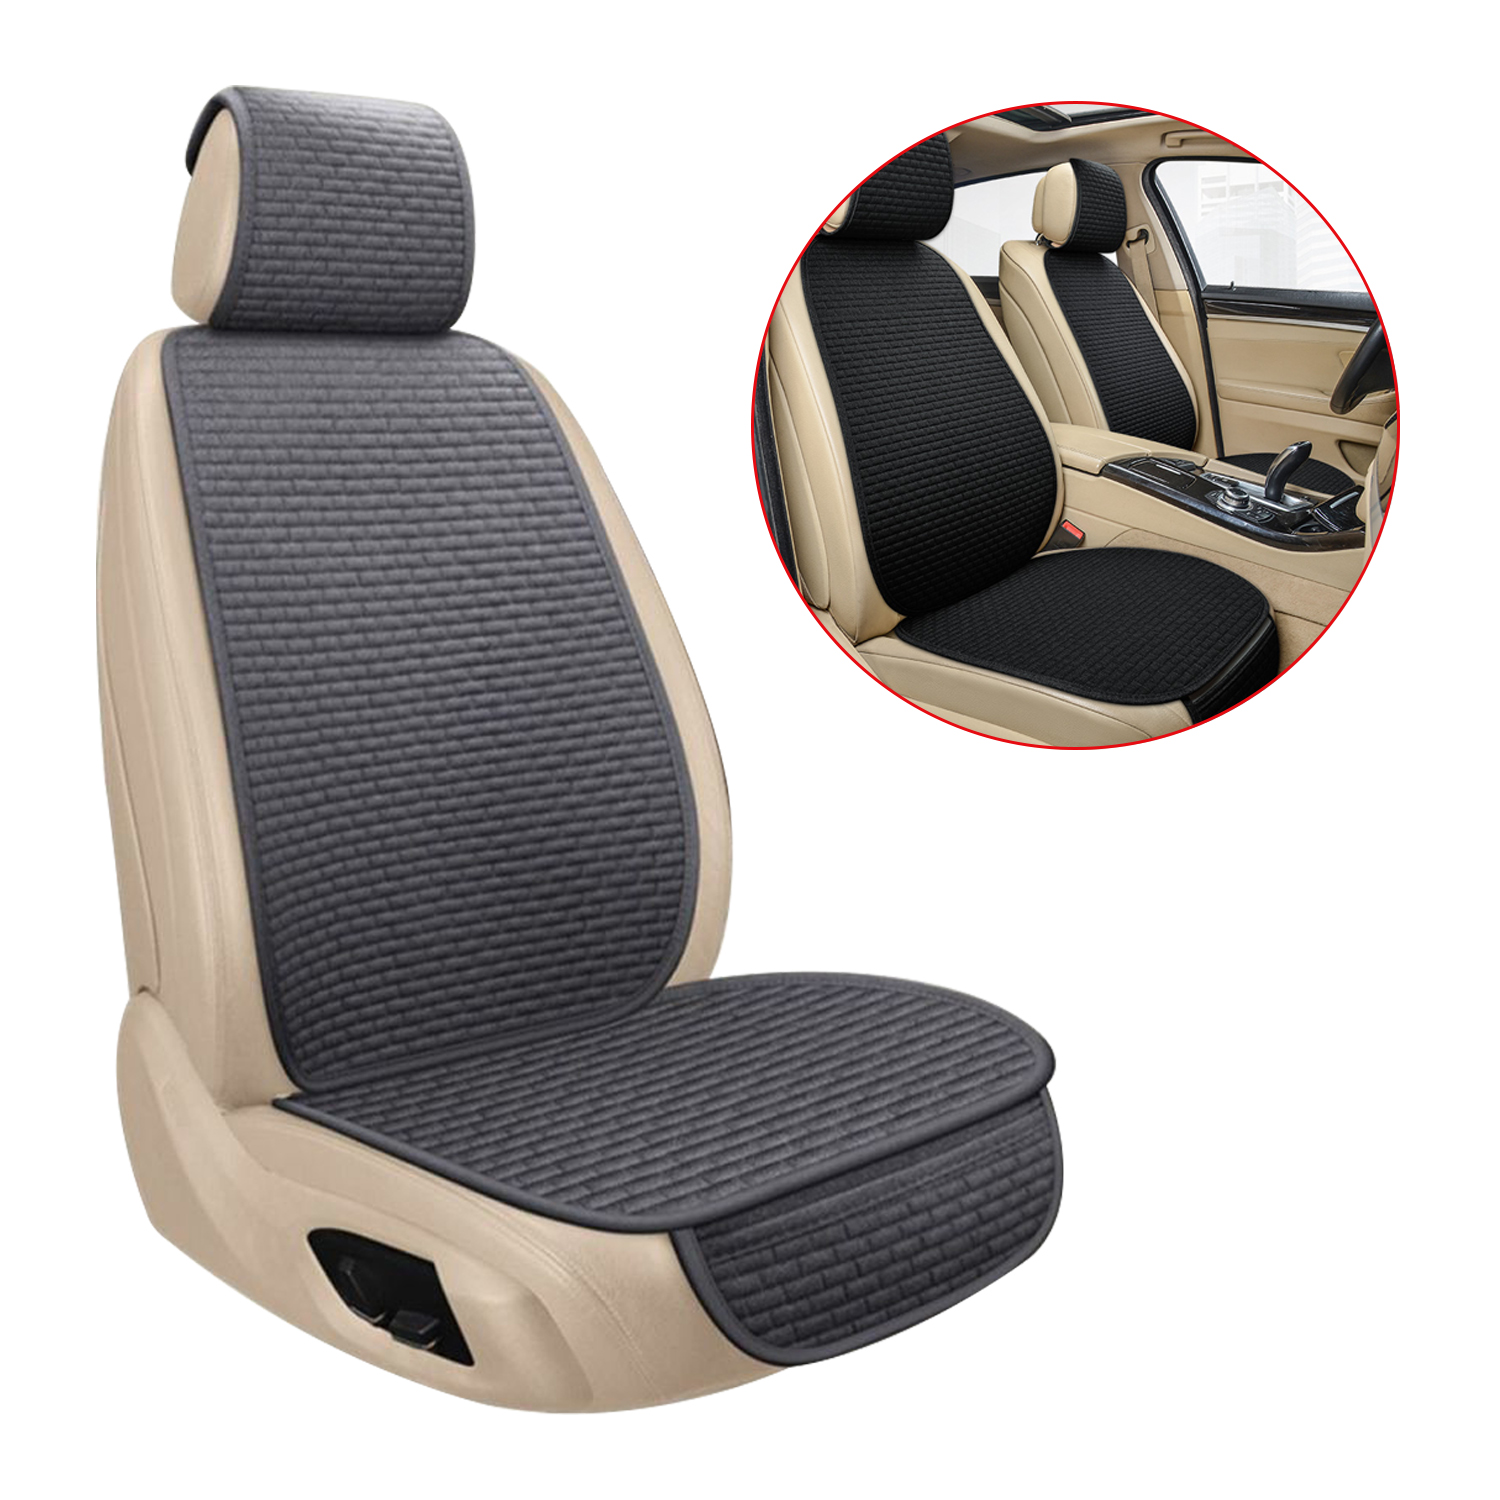 Funda protectora para asiento de coche delantero, cojín de tela de lino, accesorios para coche, tamaño Universal, antideslizante